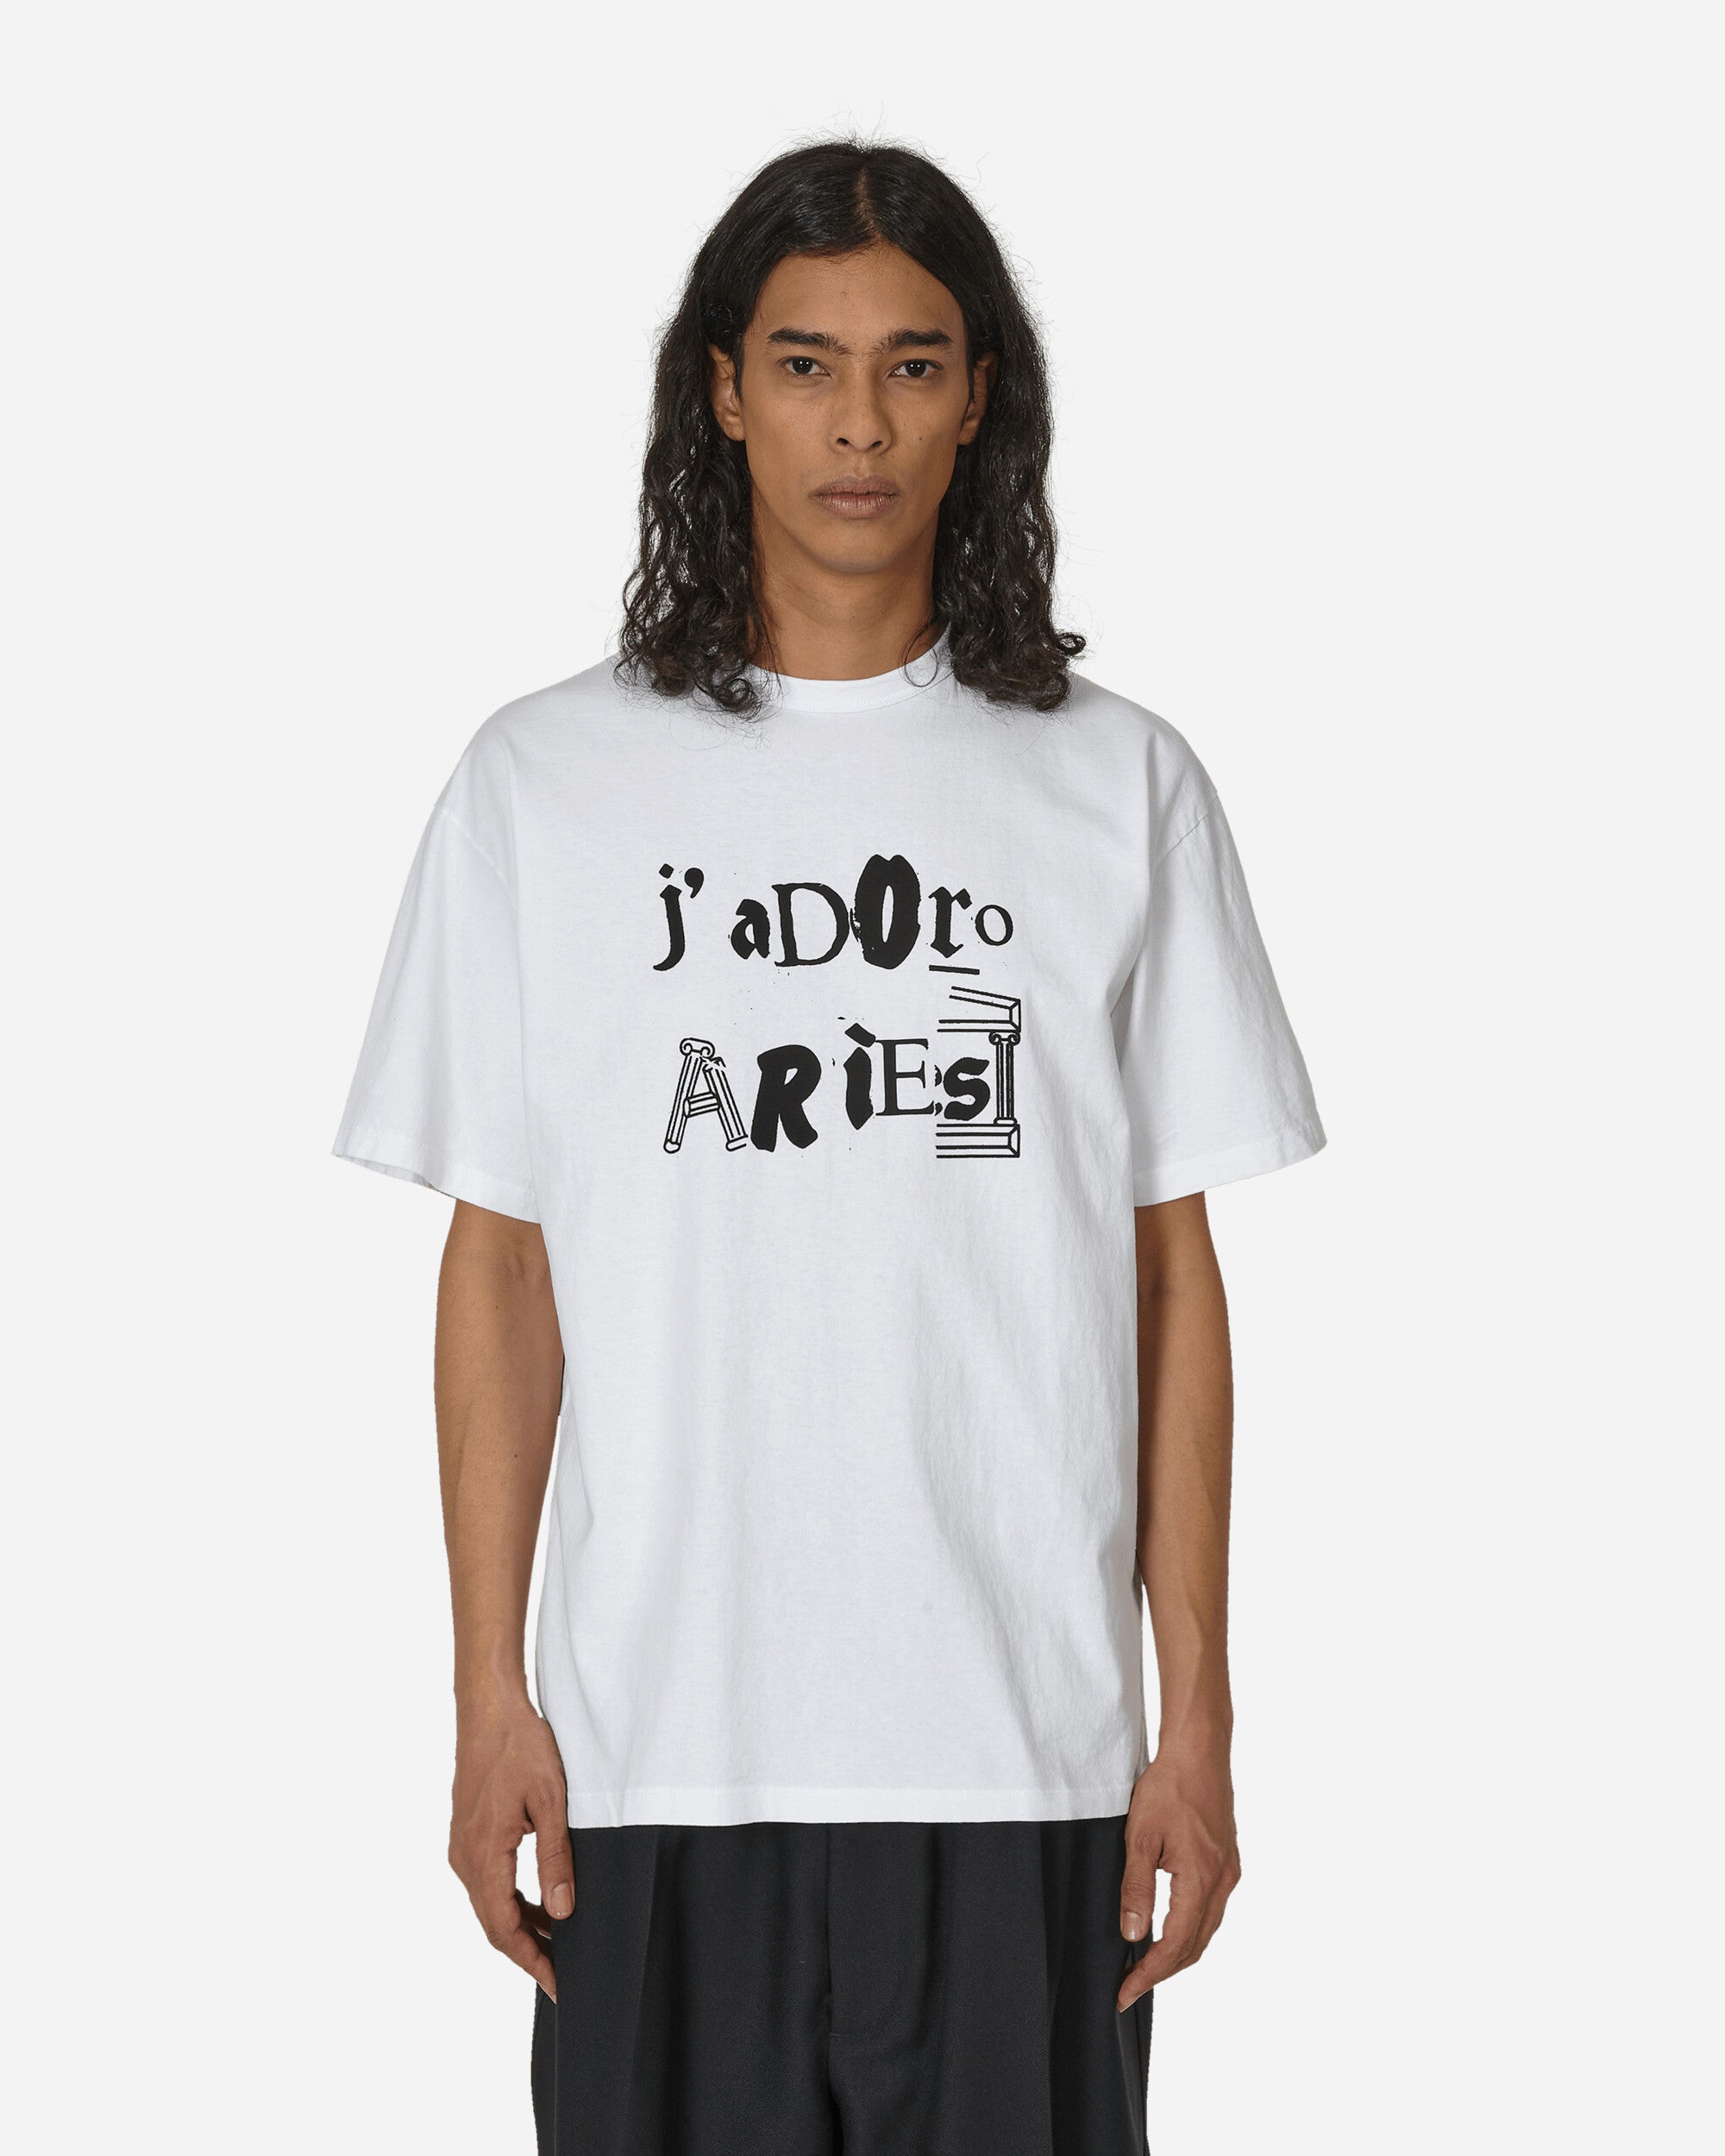 J'Adoro Aries Ransom T-Shirt White